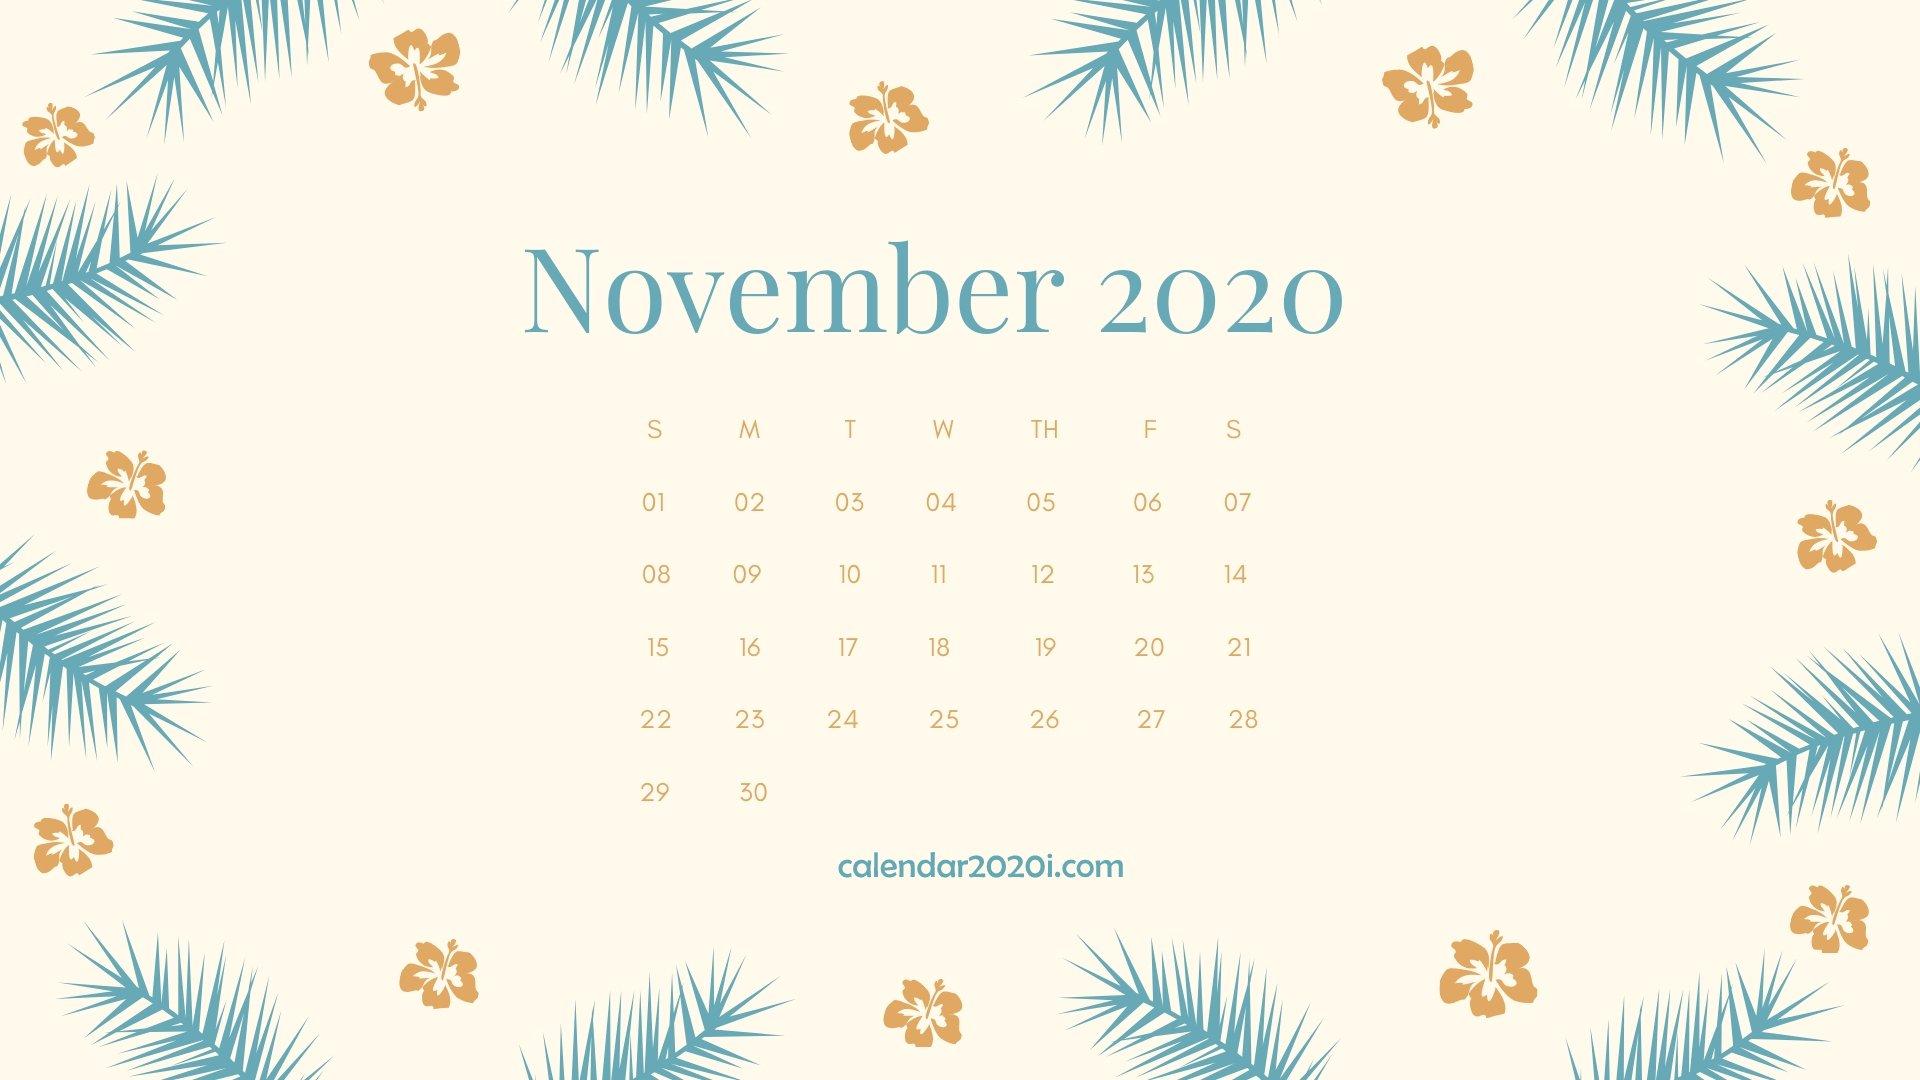 Calendar 2020 Wallpapers - Wallpaper Cave